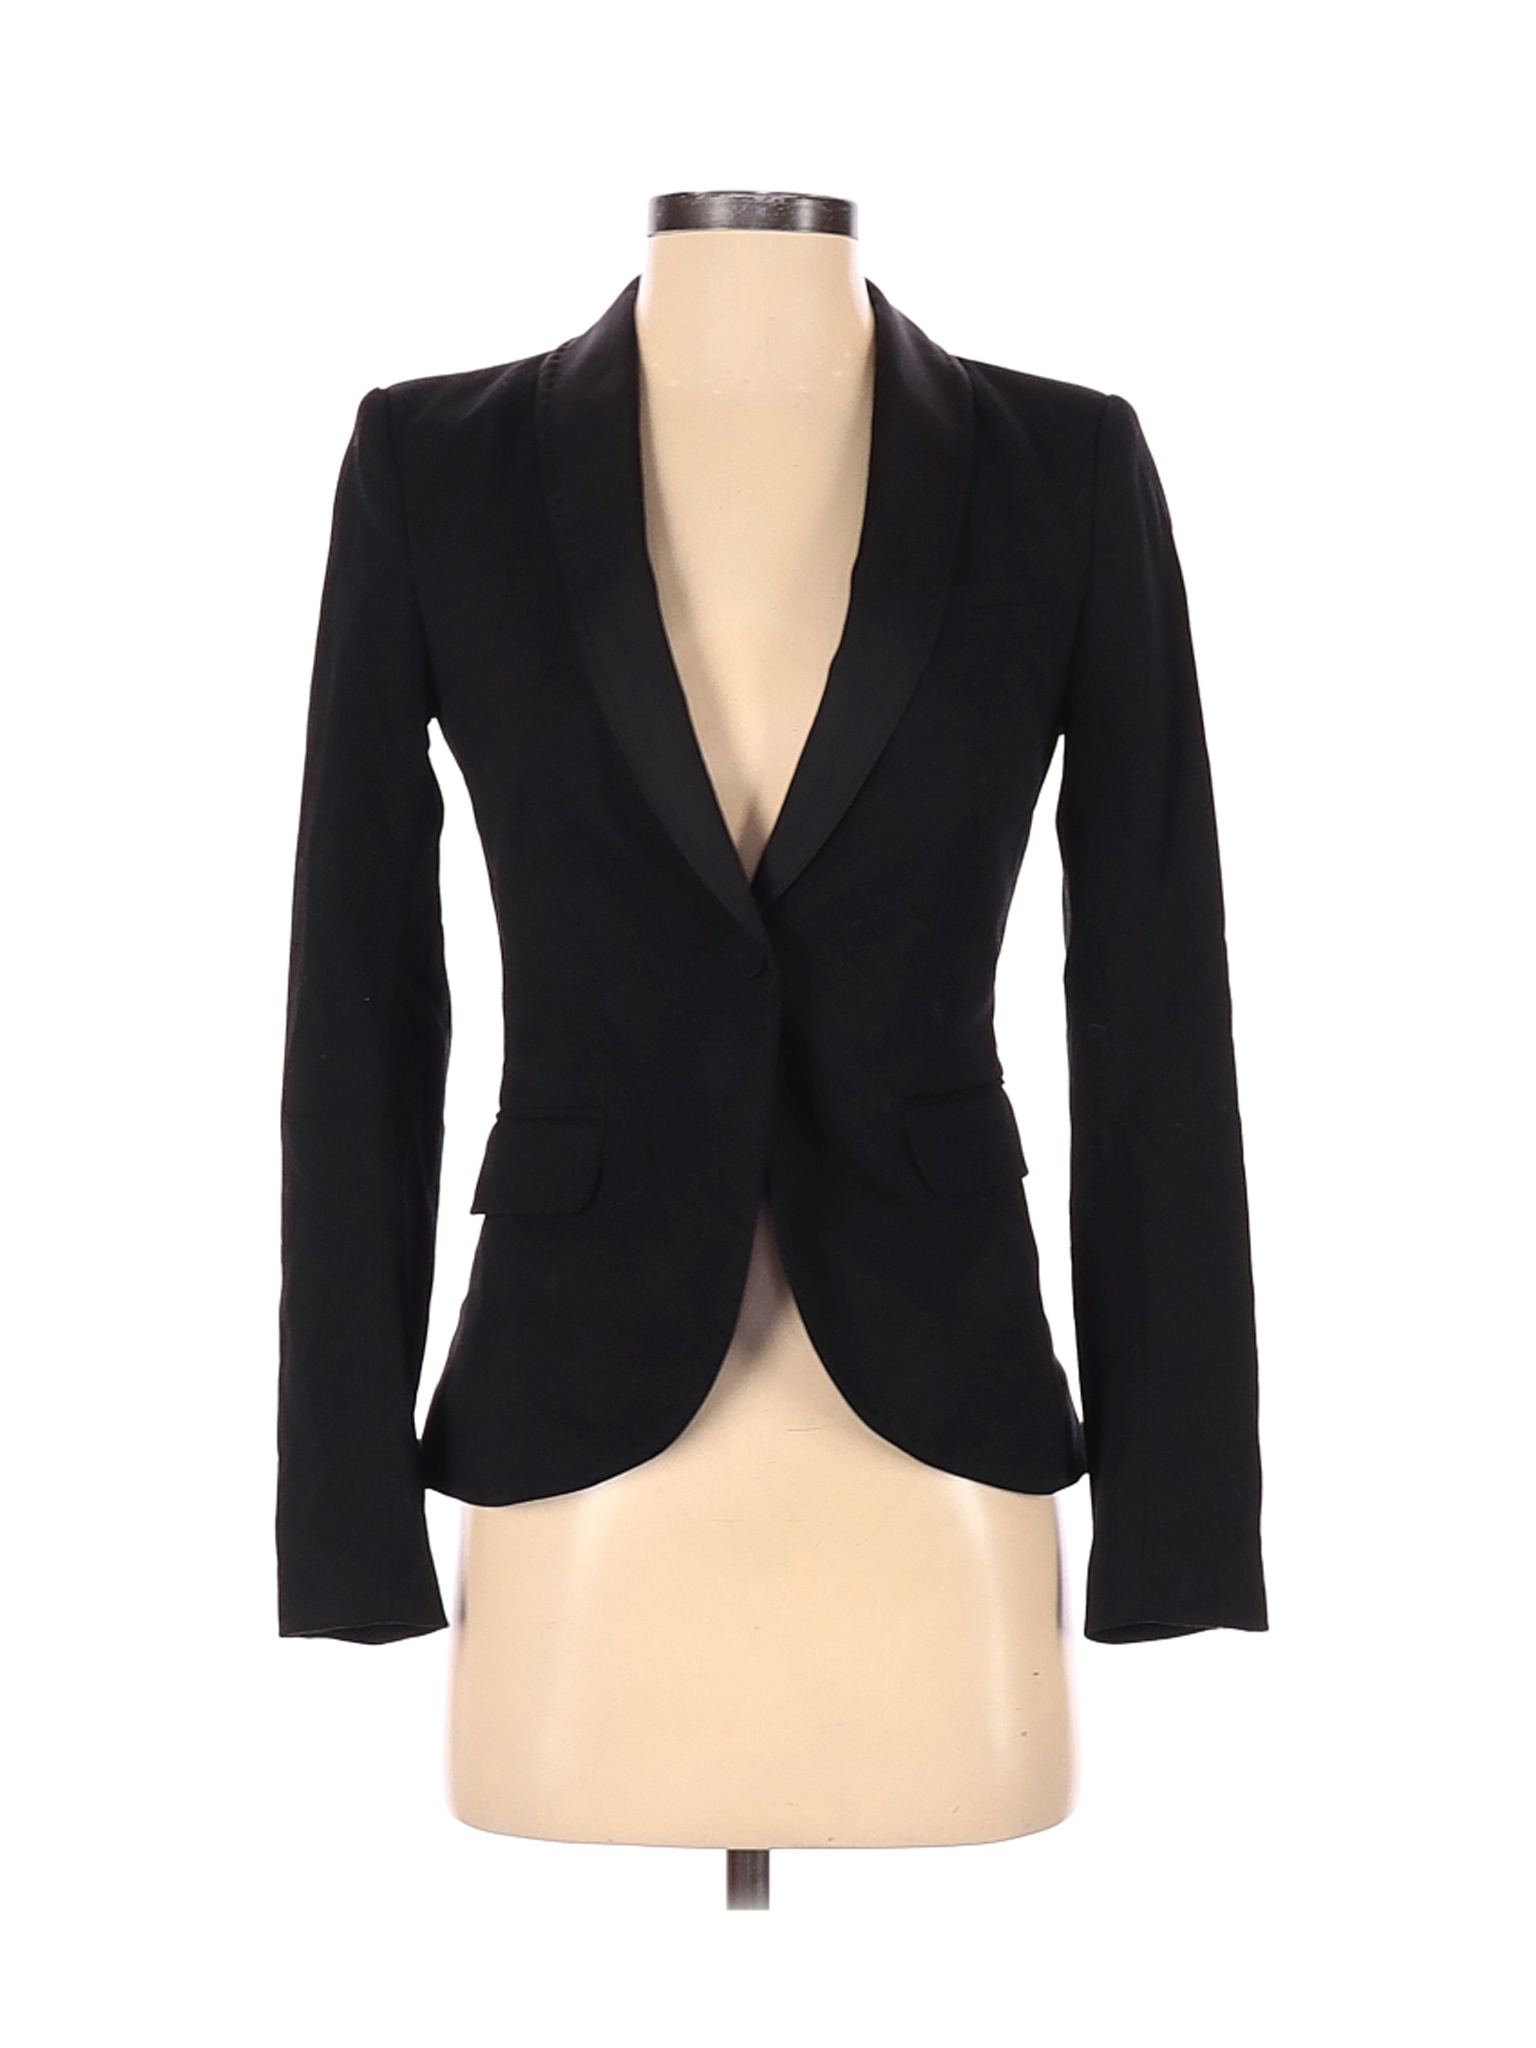 H&M Women Black Blazer 2 | eBay